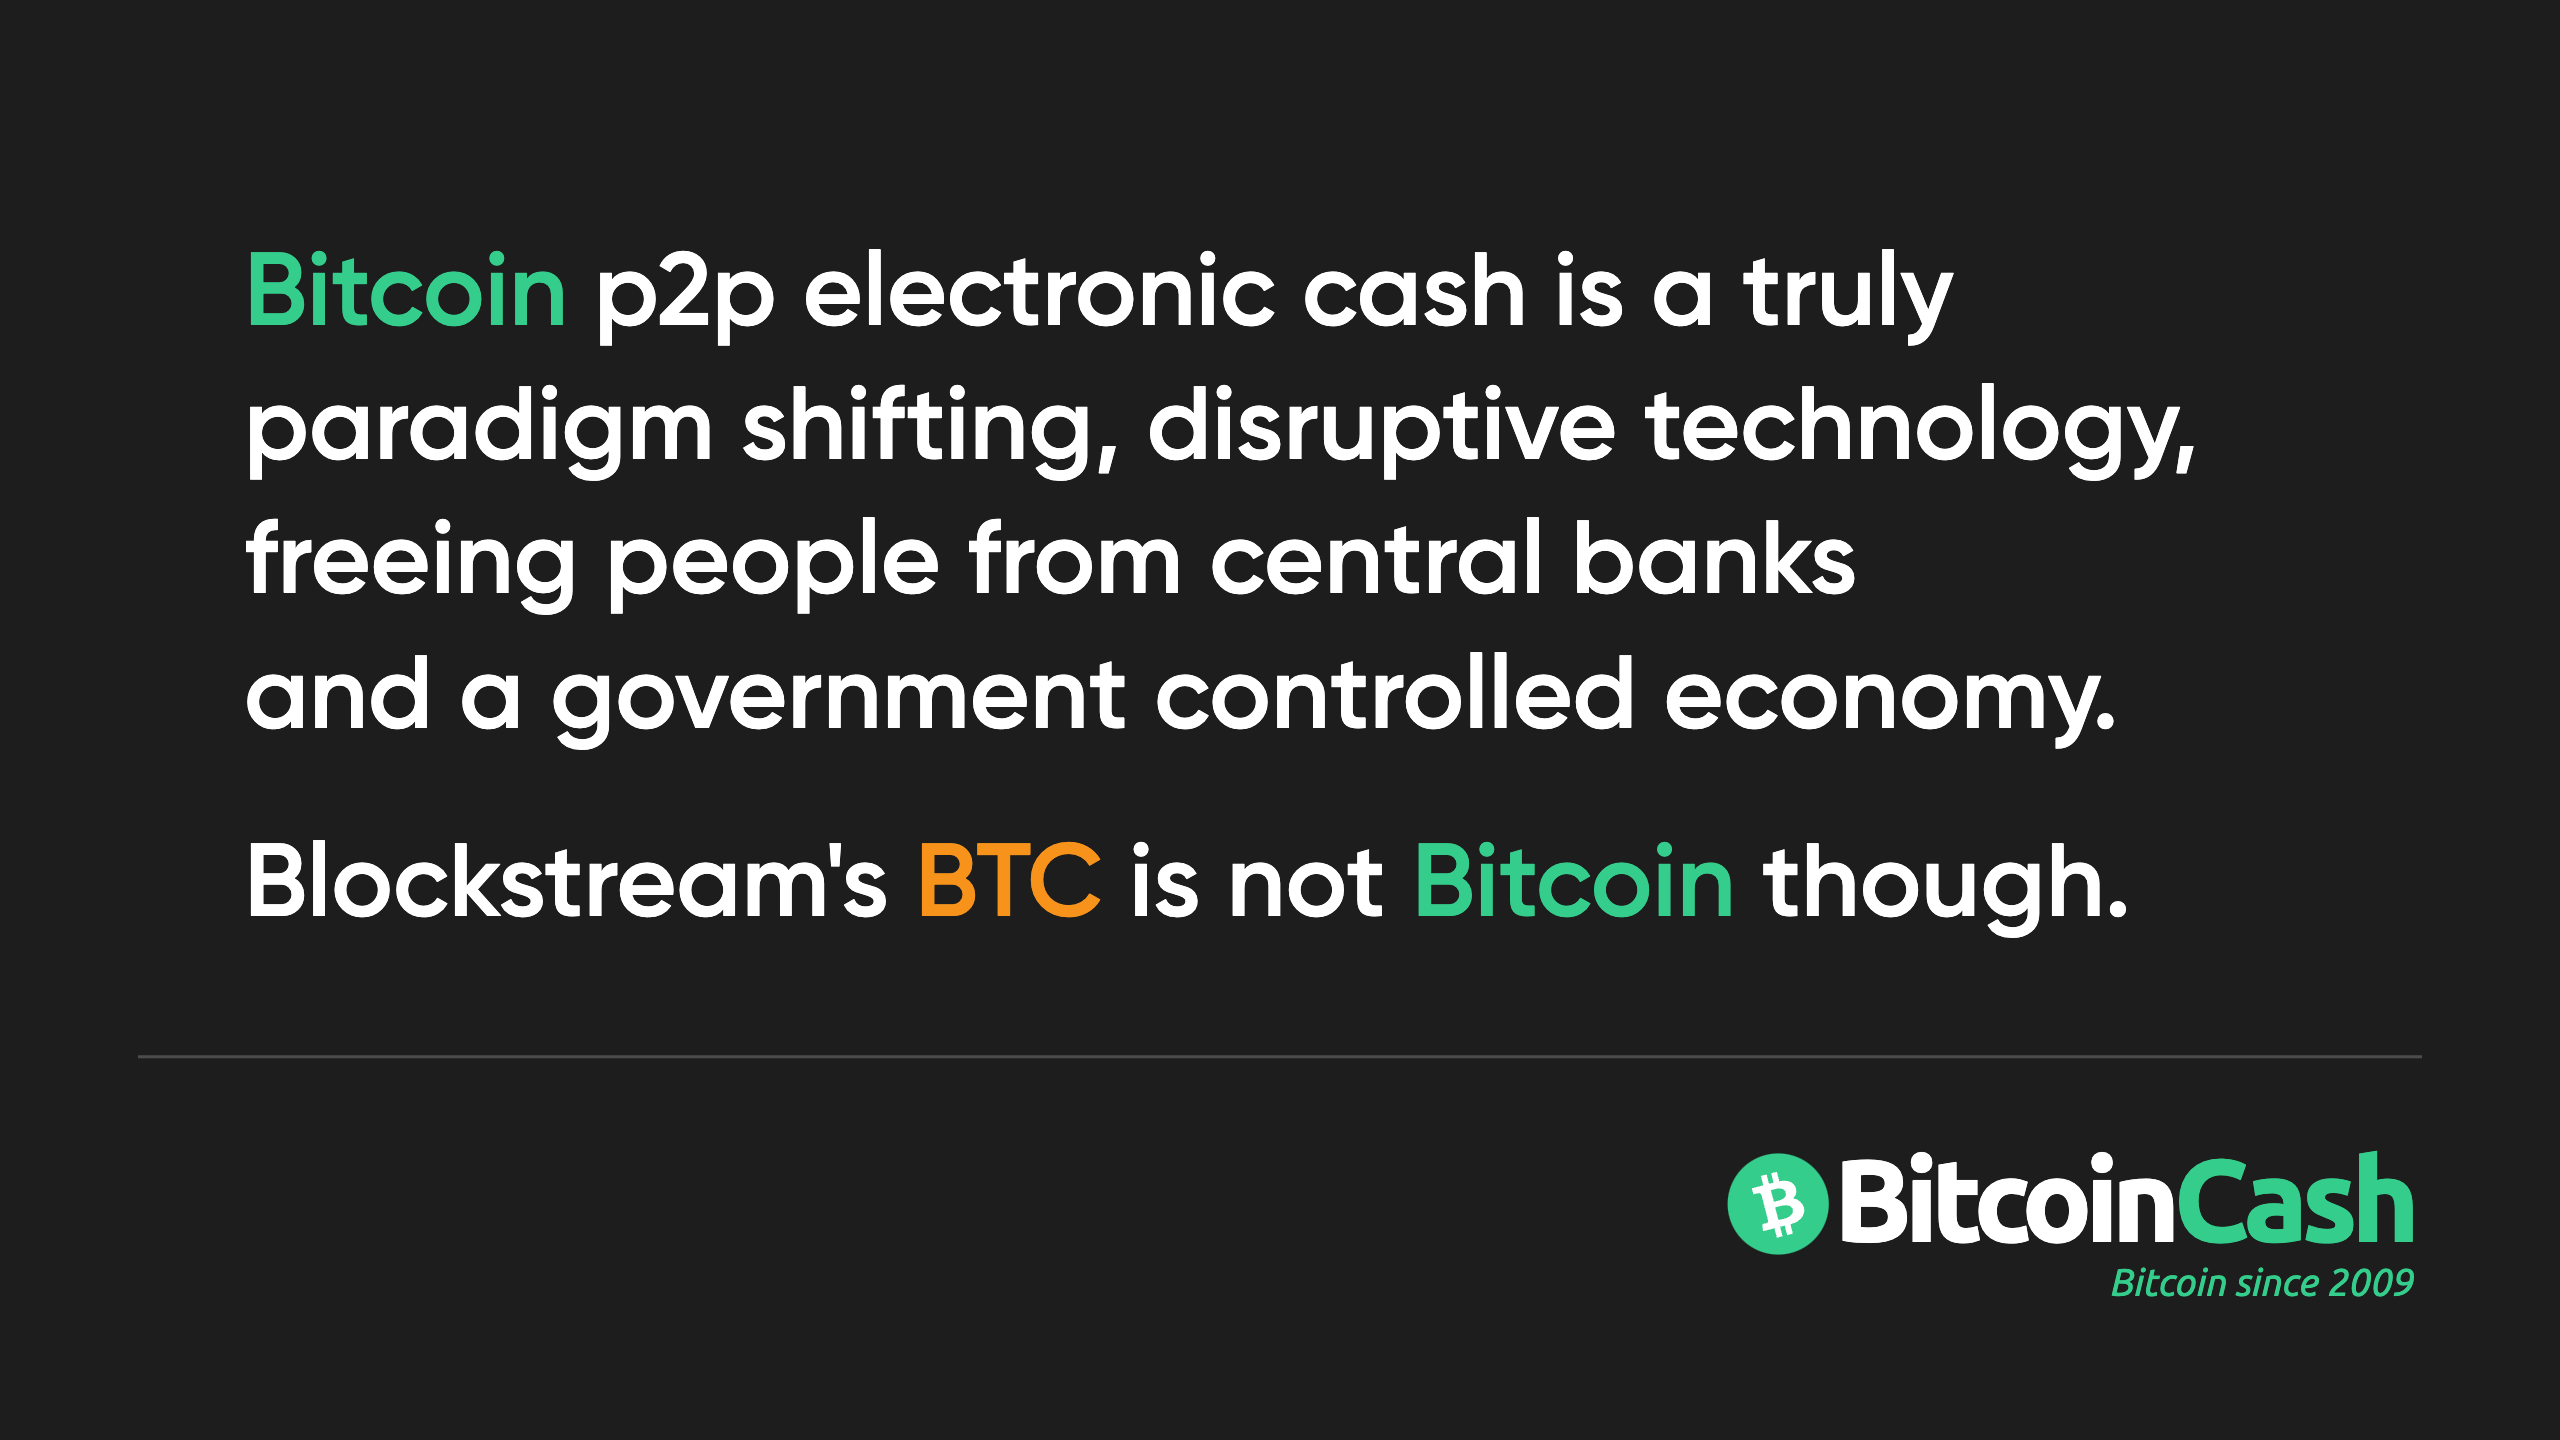 Bitcoin is a paradigm shift